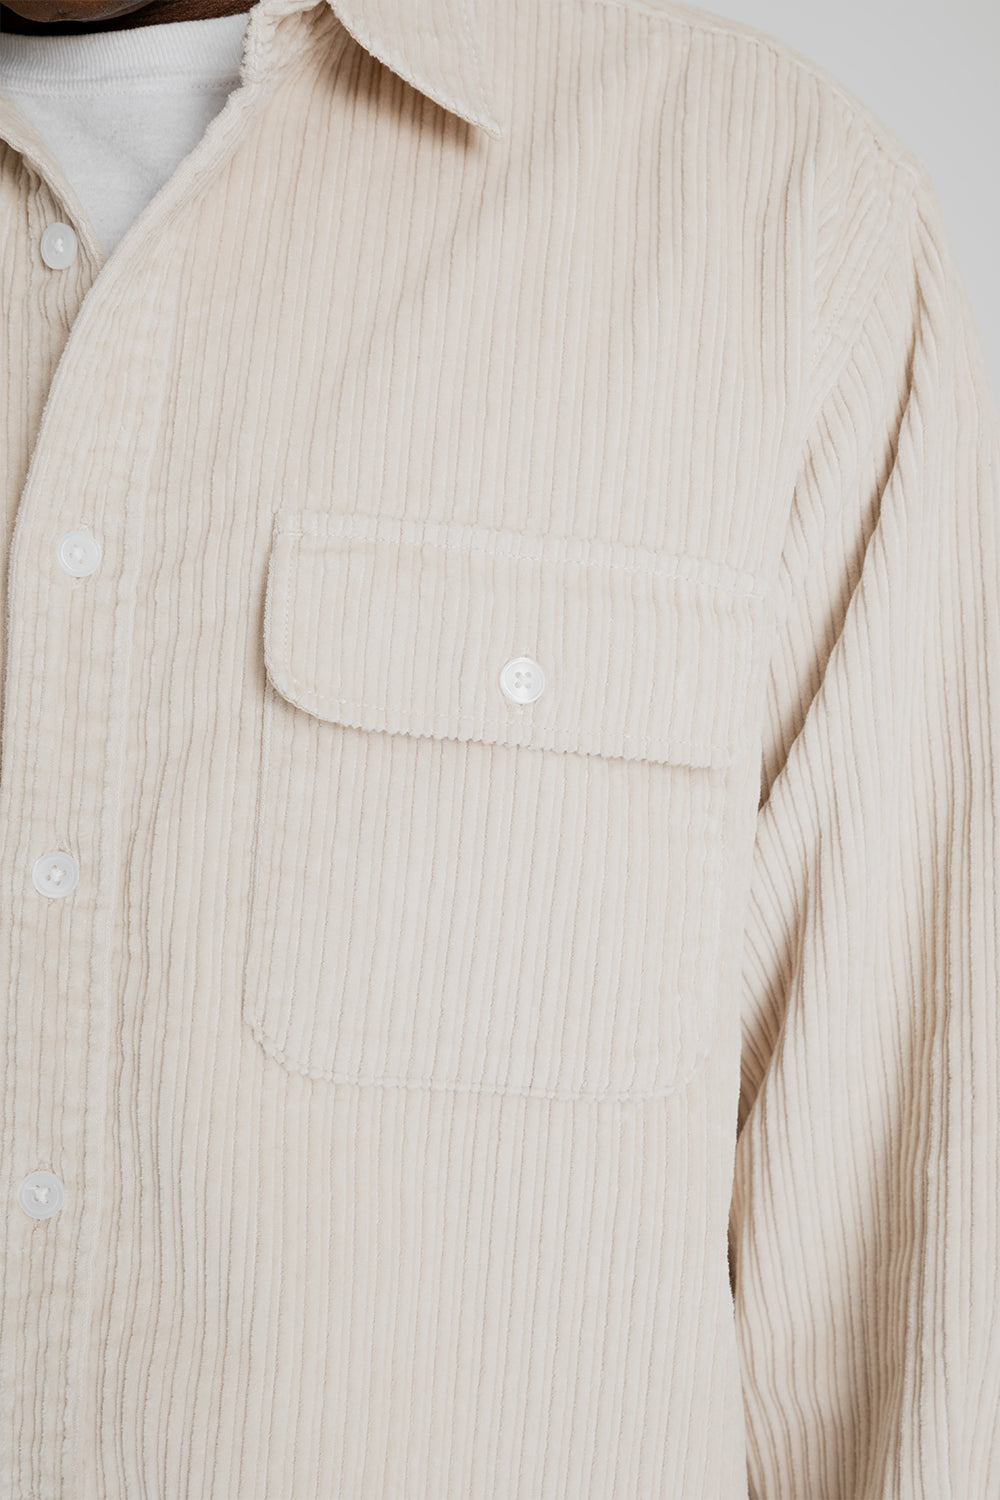 Frizmworks Alternate Corduroy Shirt Light Beige Detail 02